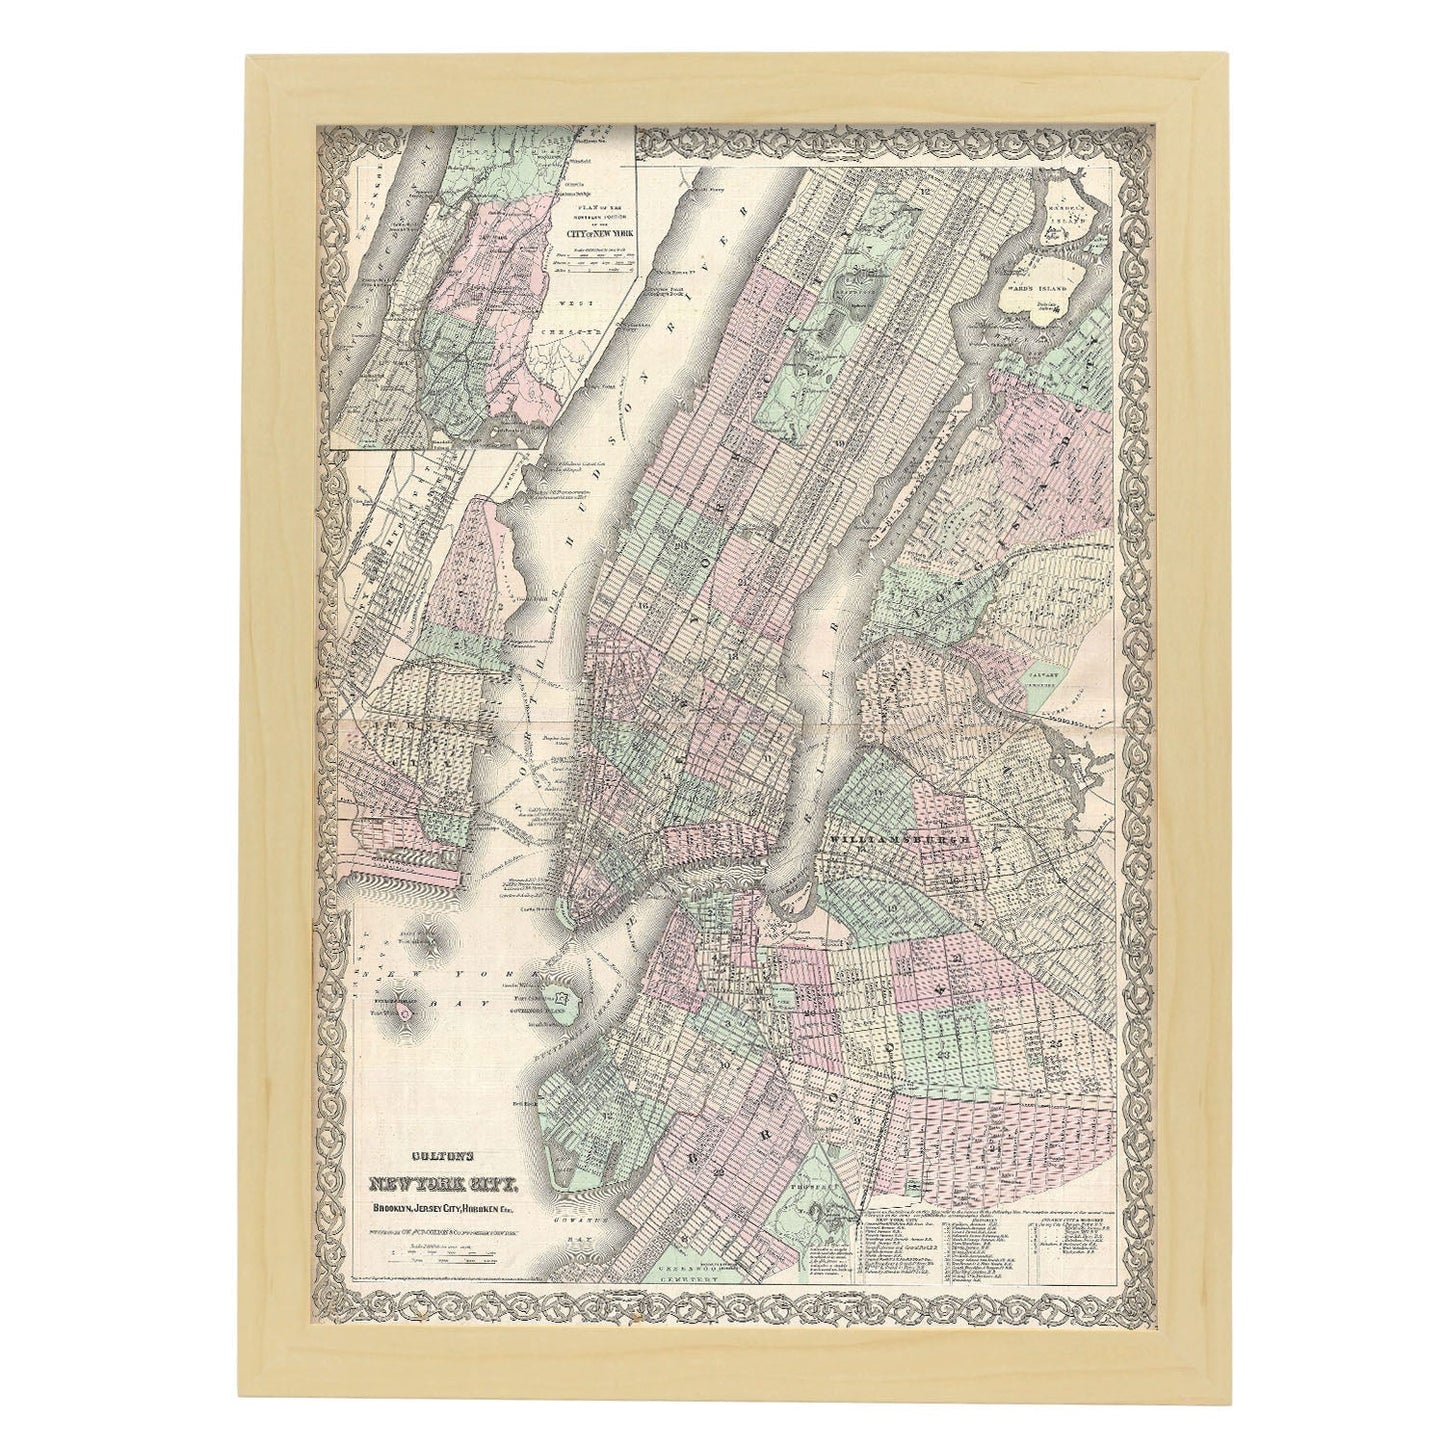 1865 Colton Map of New York City Manhattan Brooklyn Long Island City Geographicus NewYorkCity colton 1866-Artwork-Nacnic-A3-Marco Madera clara-Nacnic Estudio SL